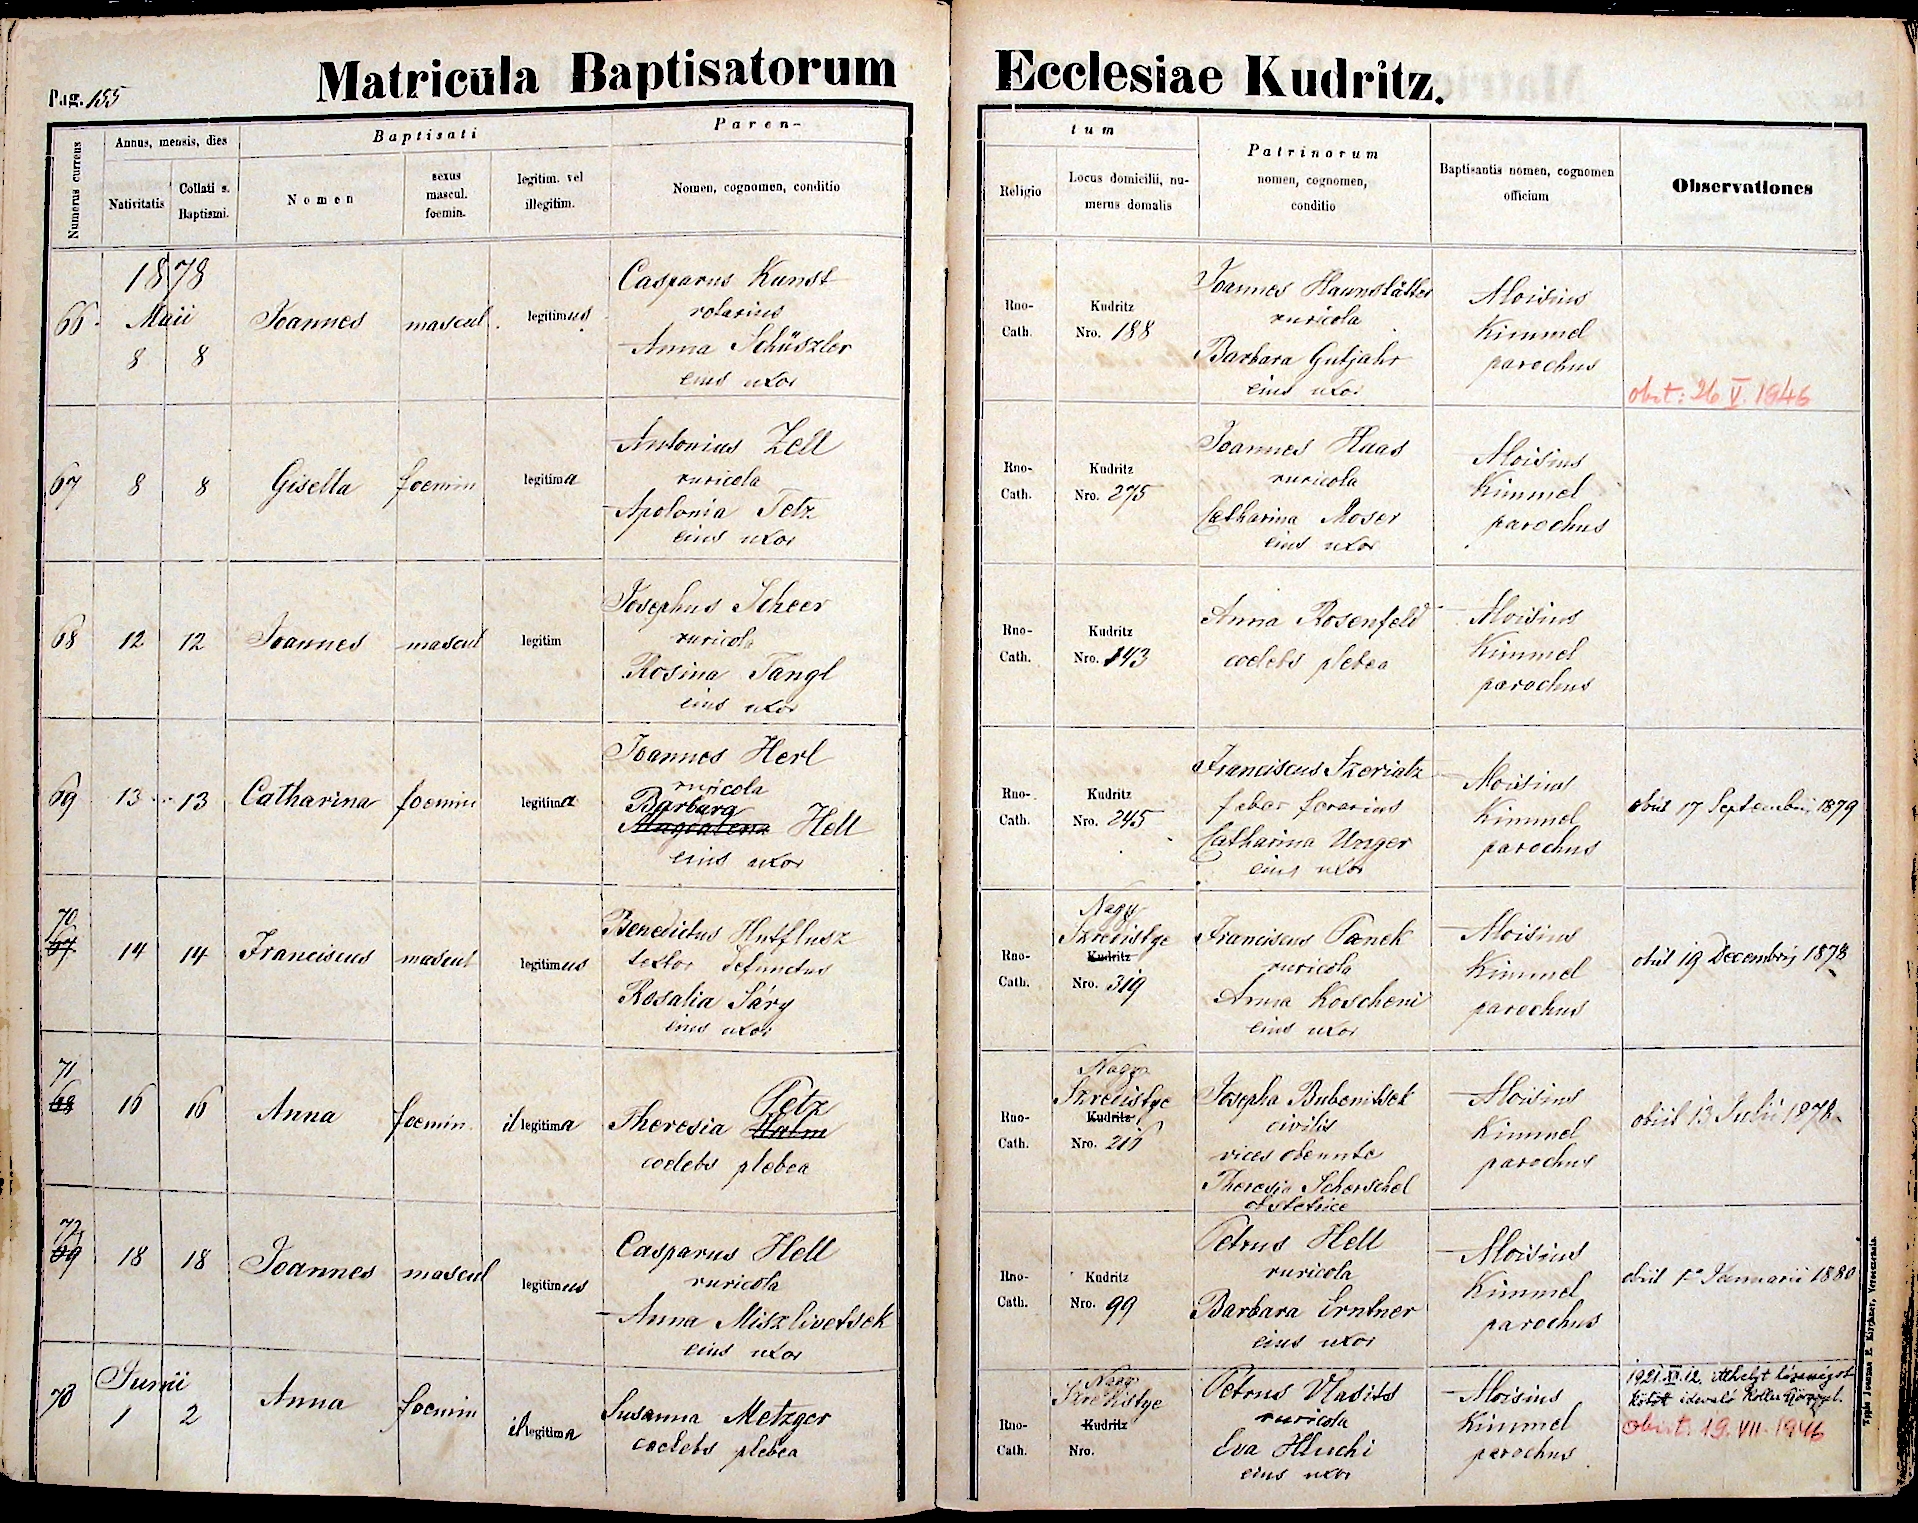 images/church_records/BIRTHS/1884-1899B/1894/155